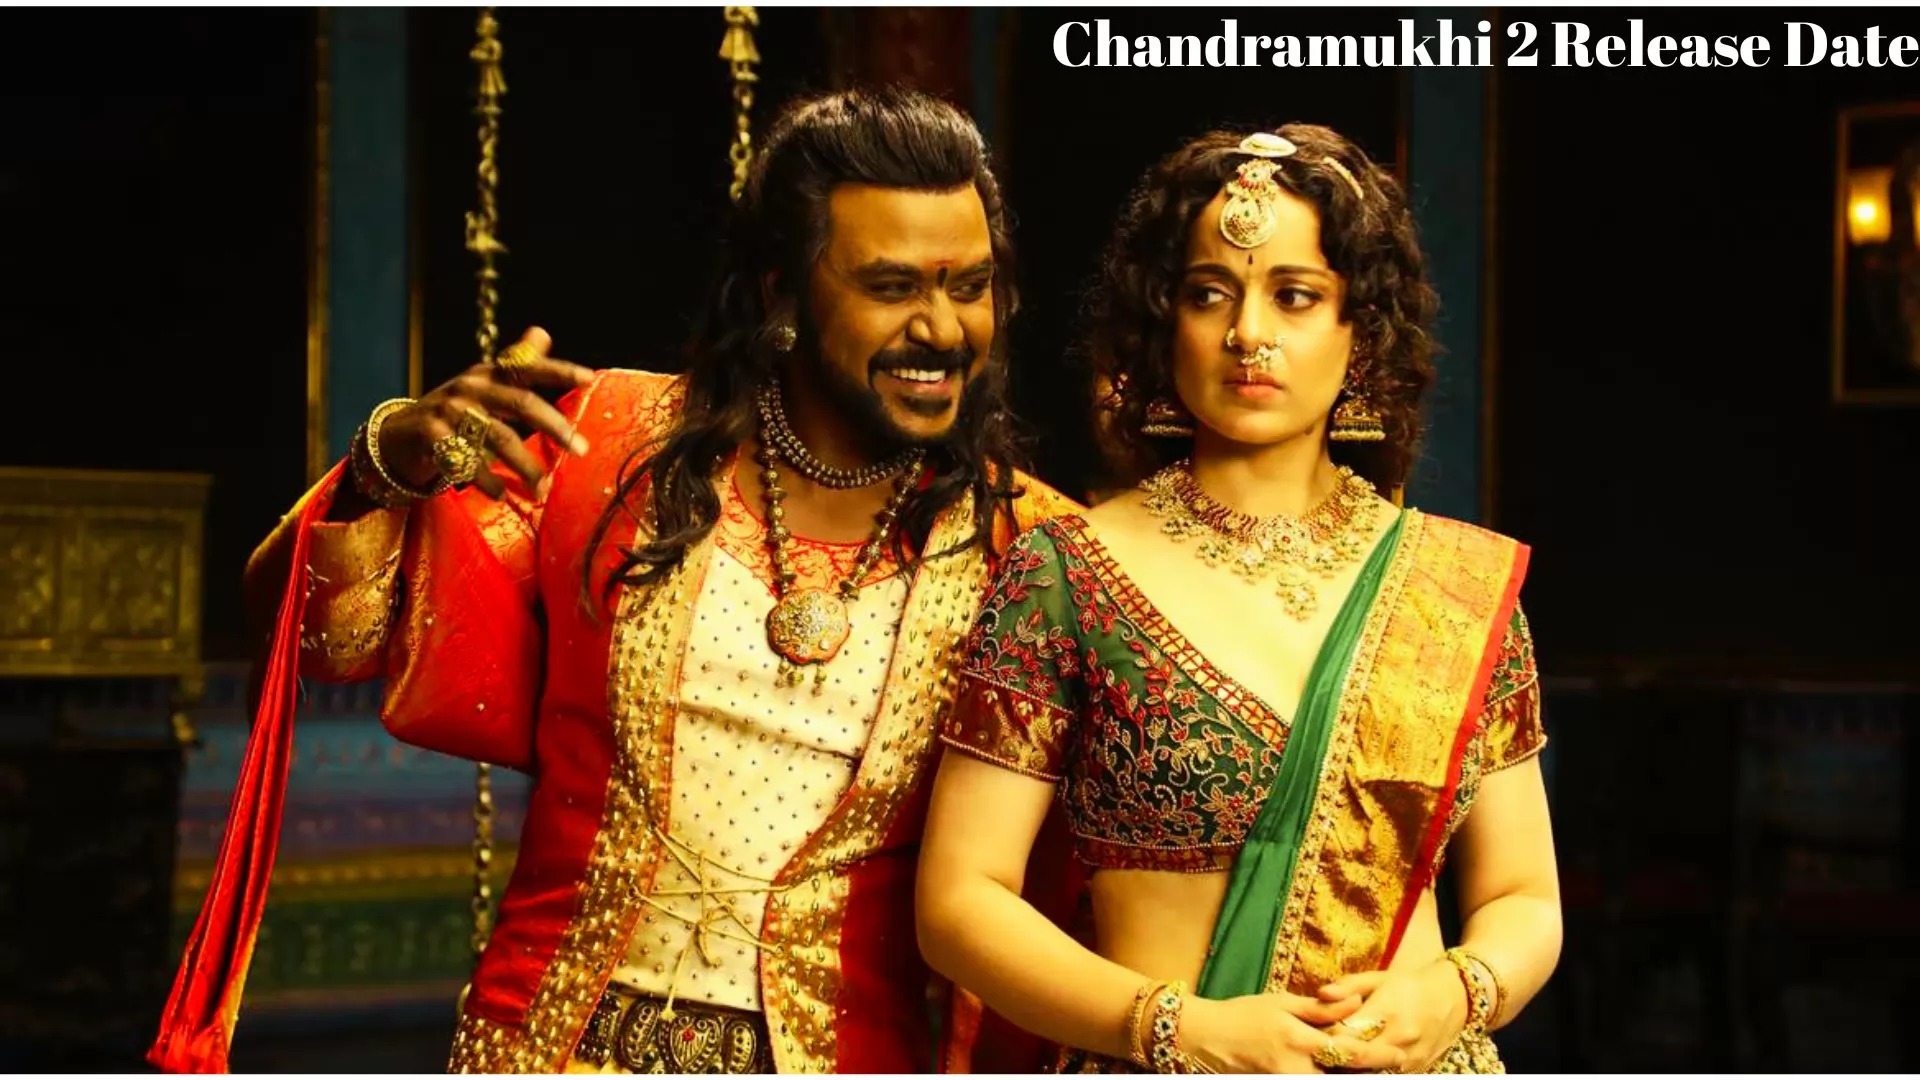 Chandramukhi 2 release date